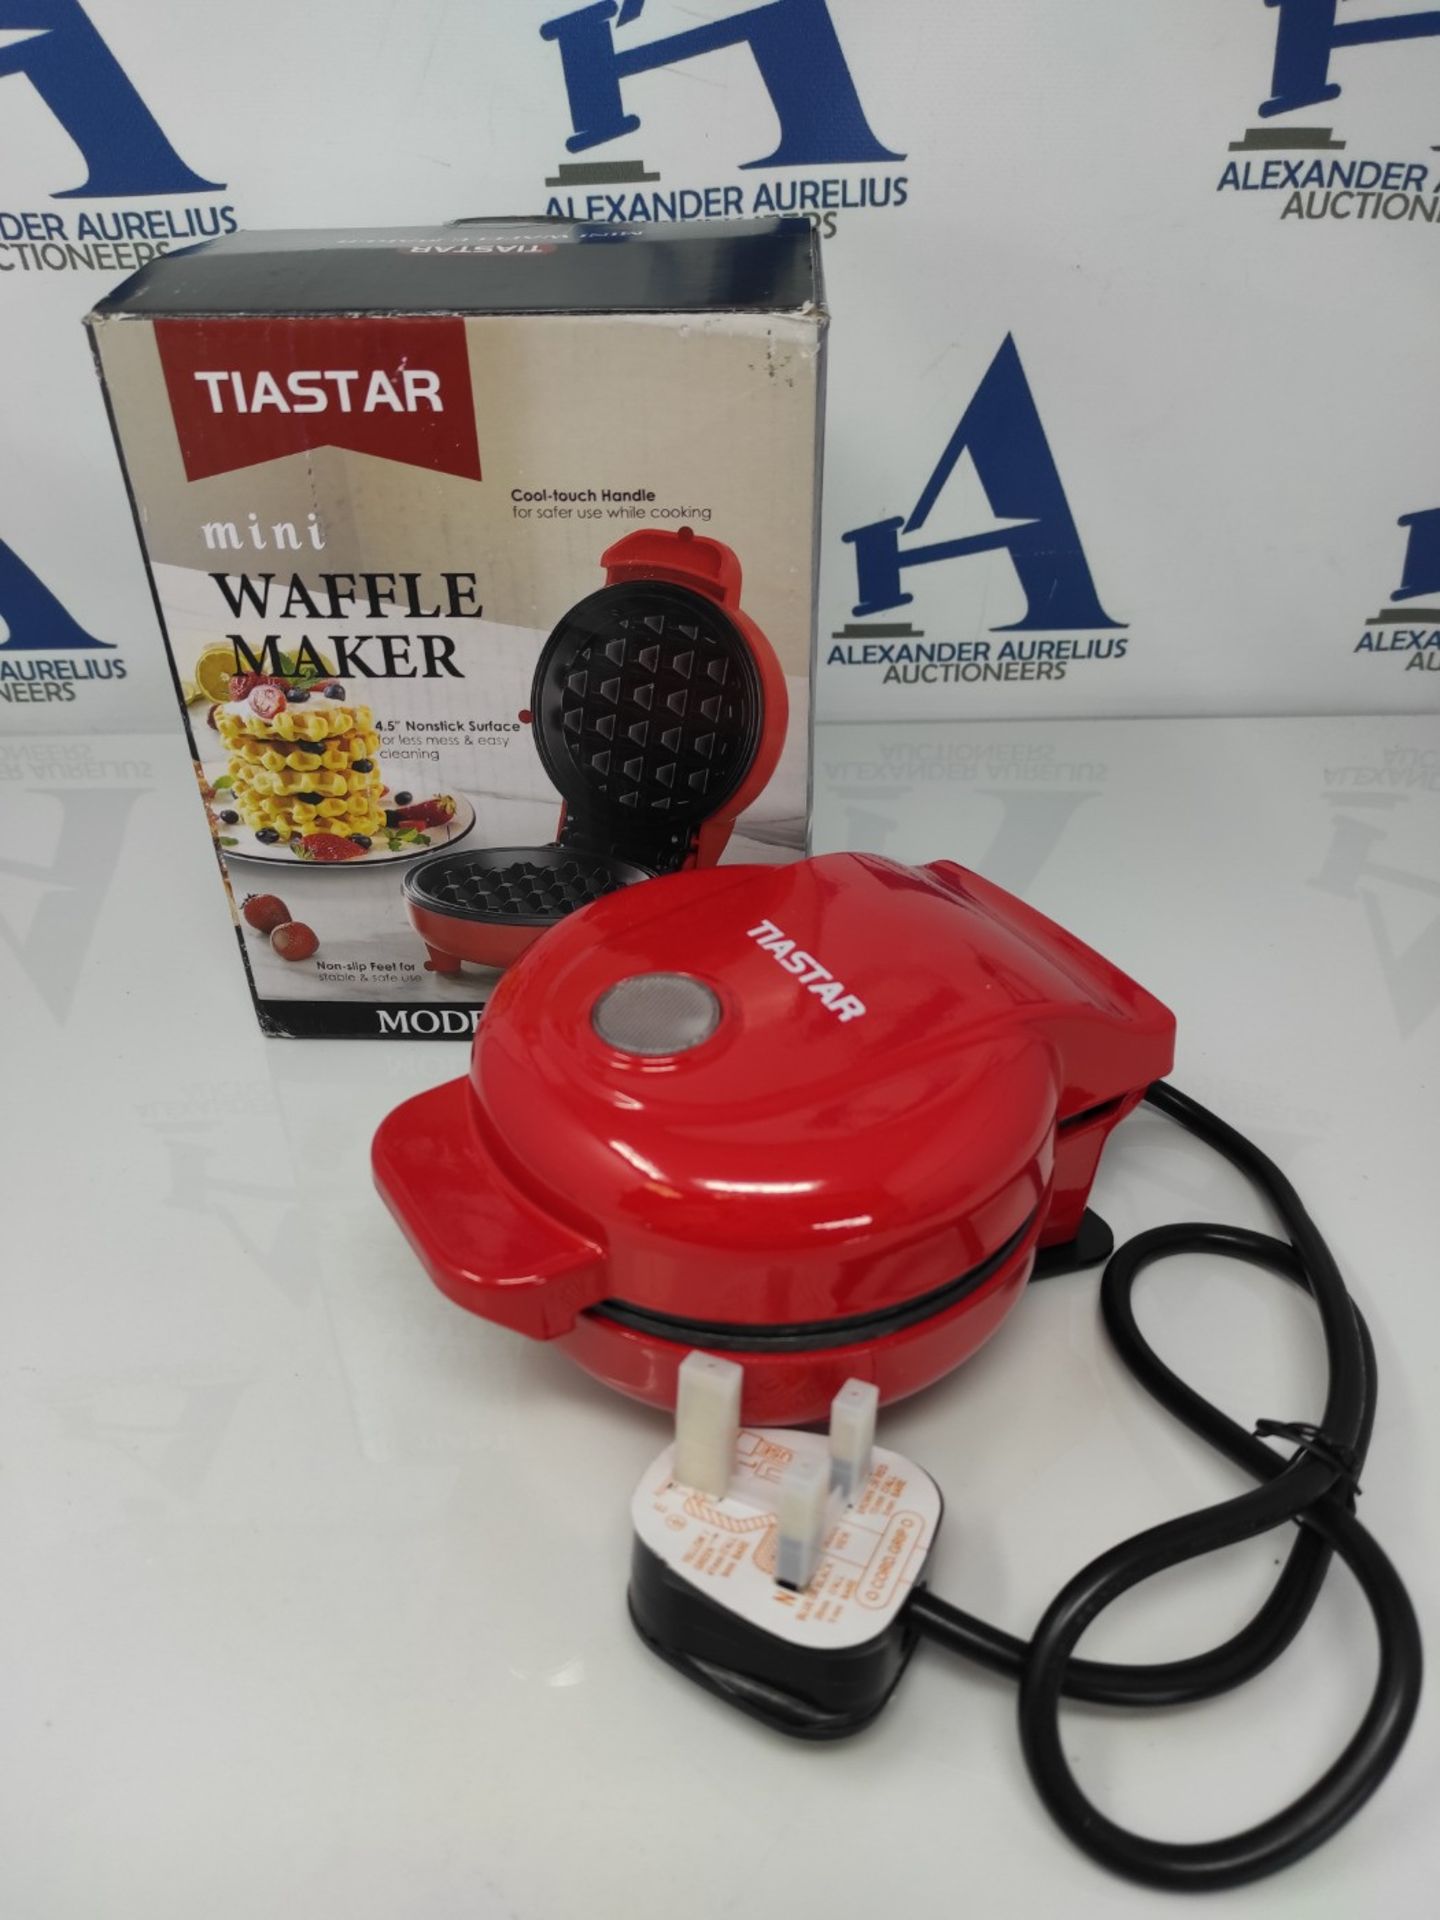 Tiastar ABW59 Mini Waffle Maker, Power/Ready Indicator Light, Non Stick Coating, 550 W - Image 2 of 3